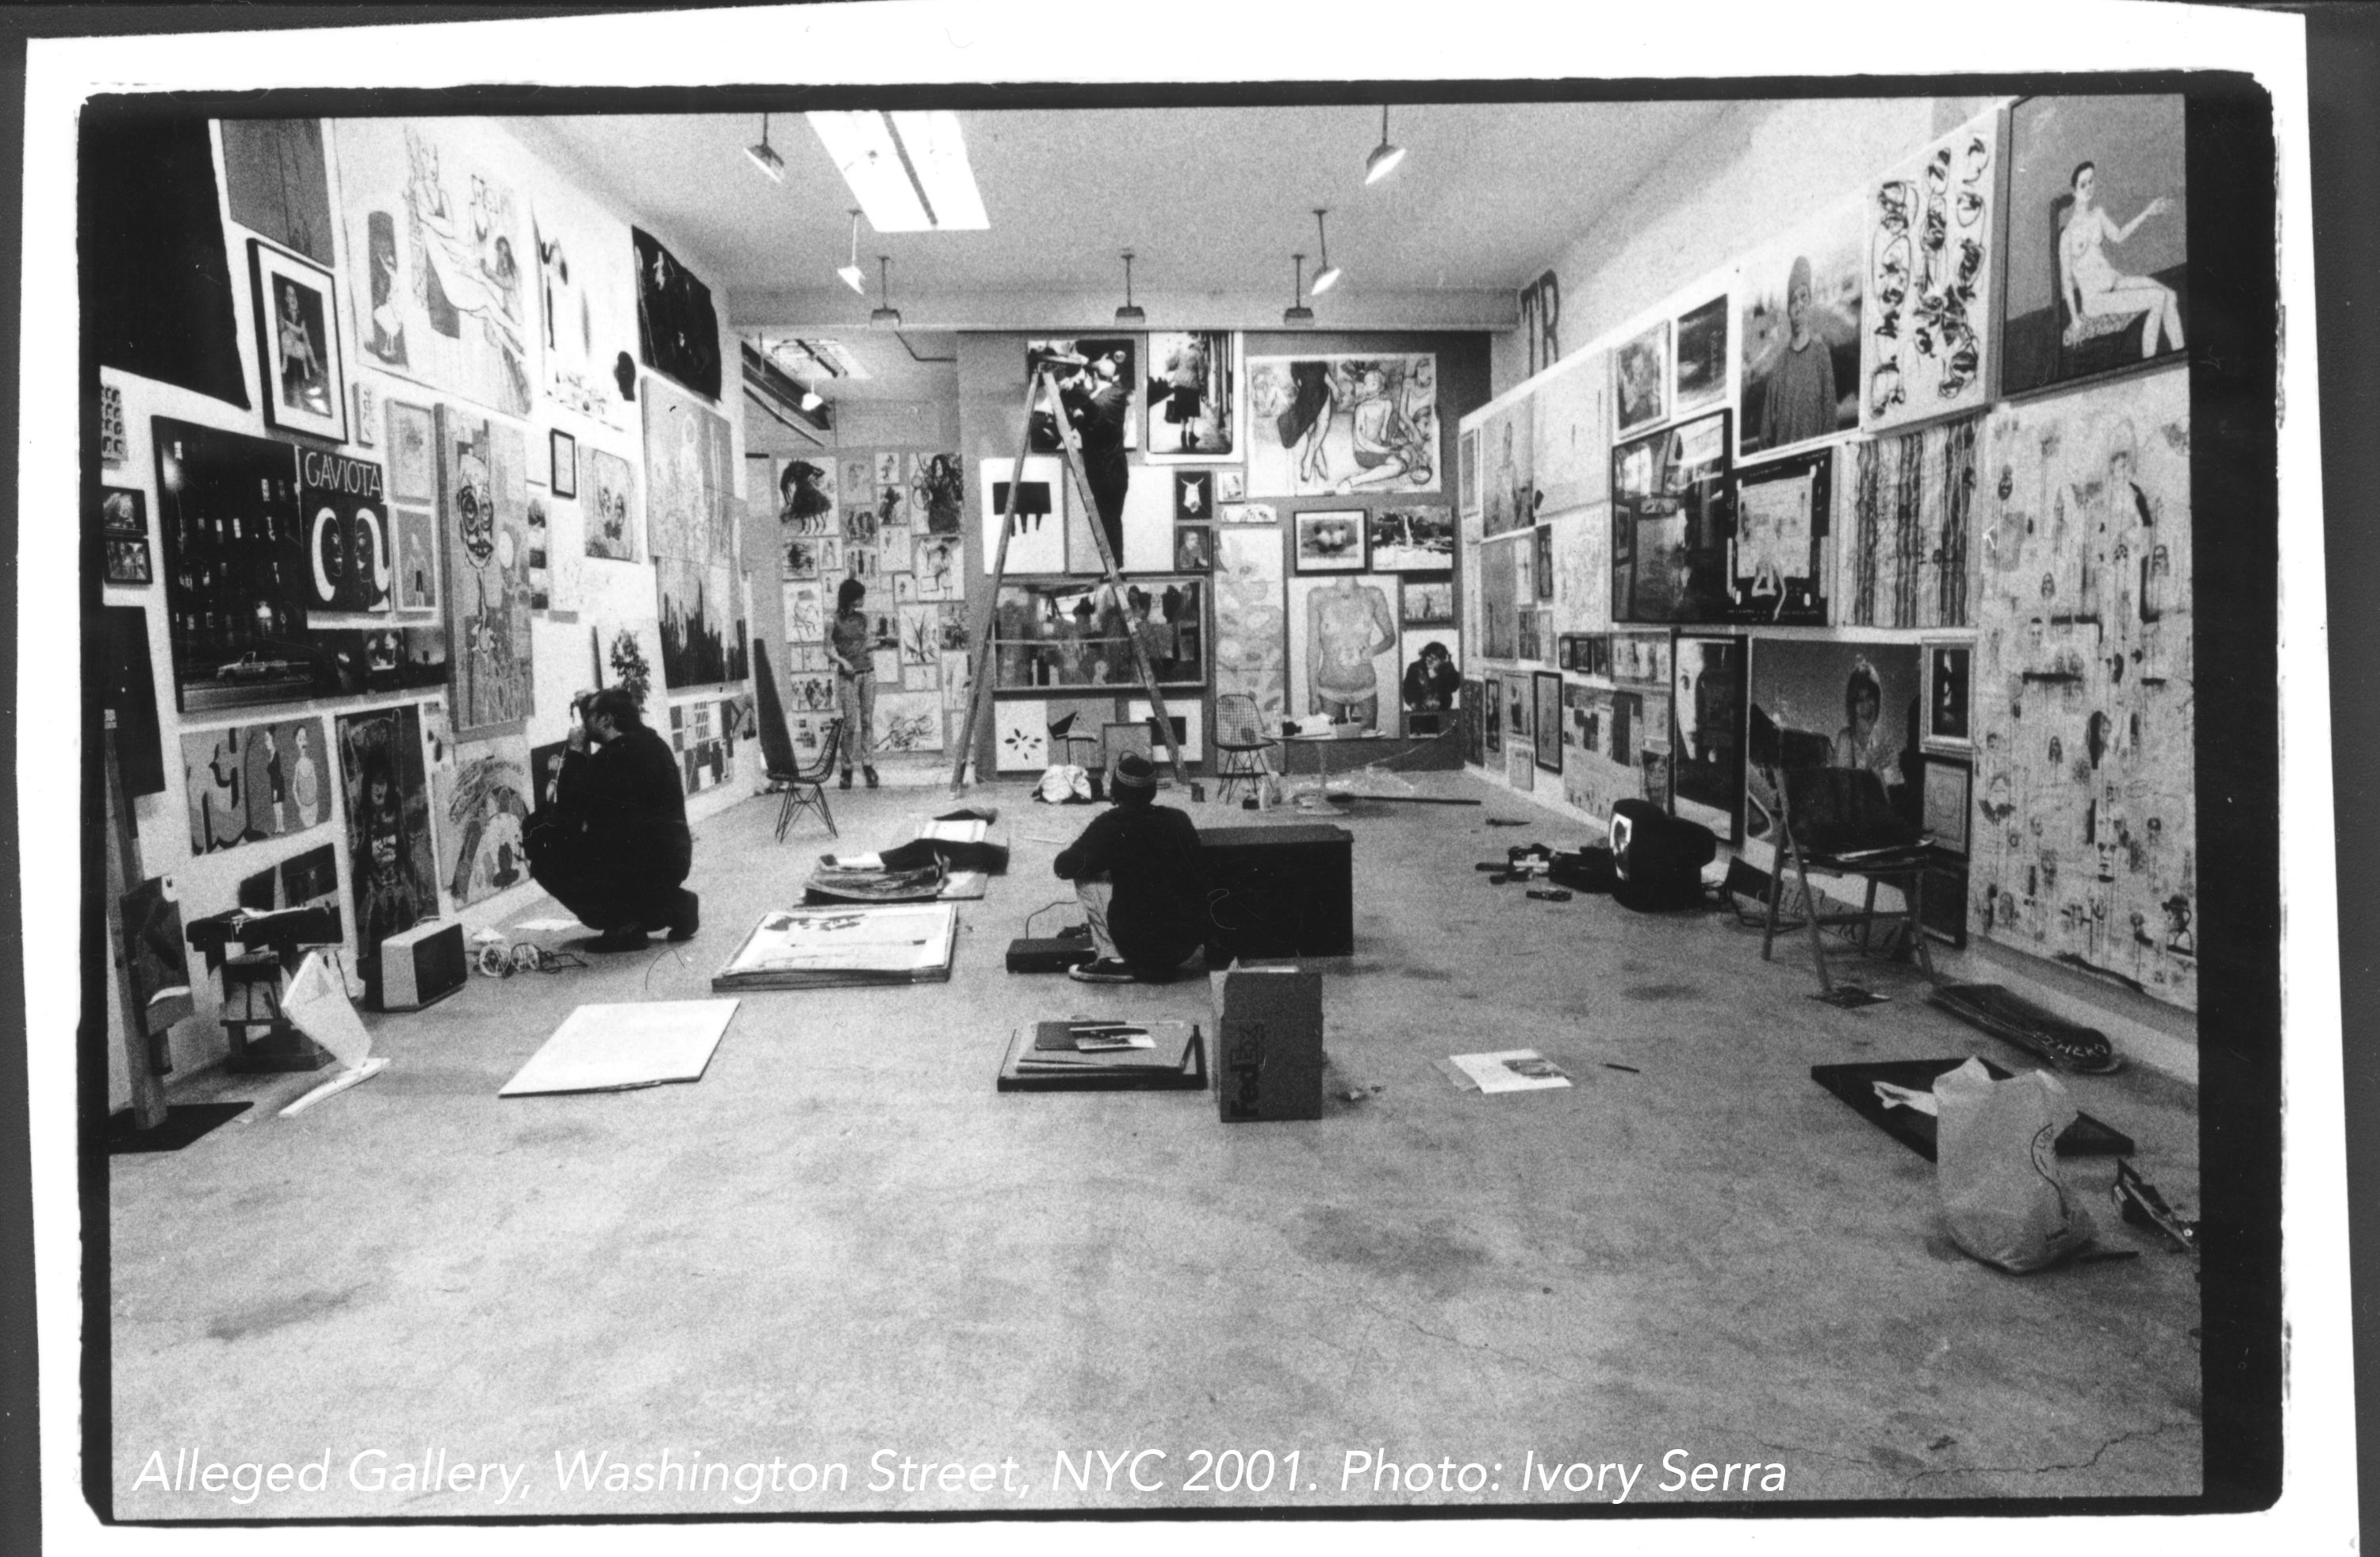 Alleged Gallery, Washington Street, NYC 2001. Photo: Ivory Serra